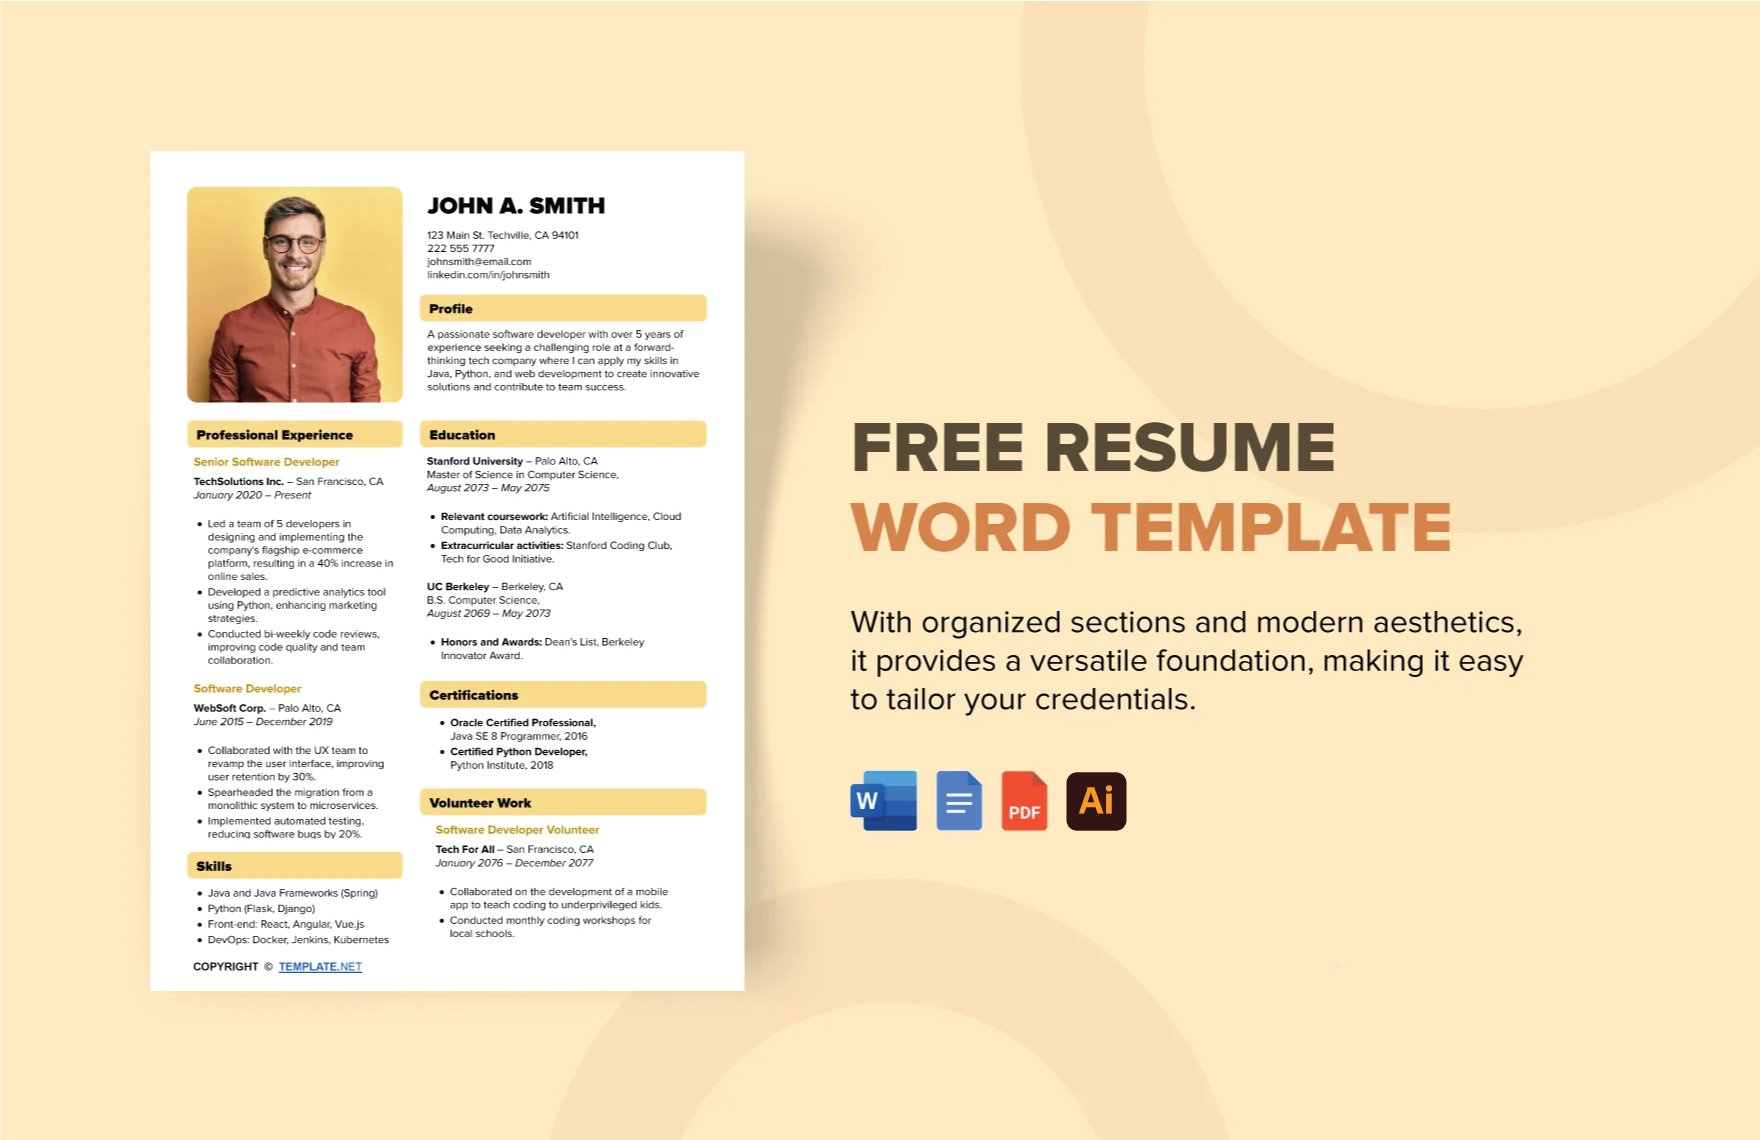 Resume Word Template